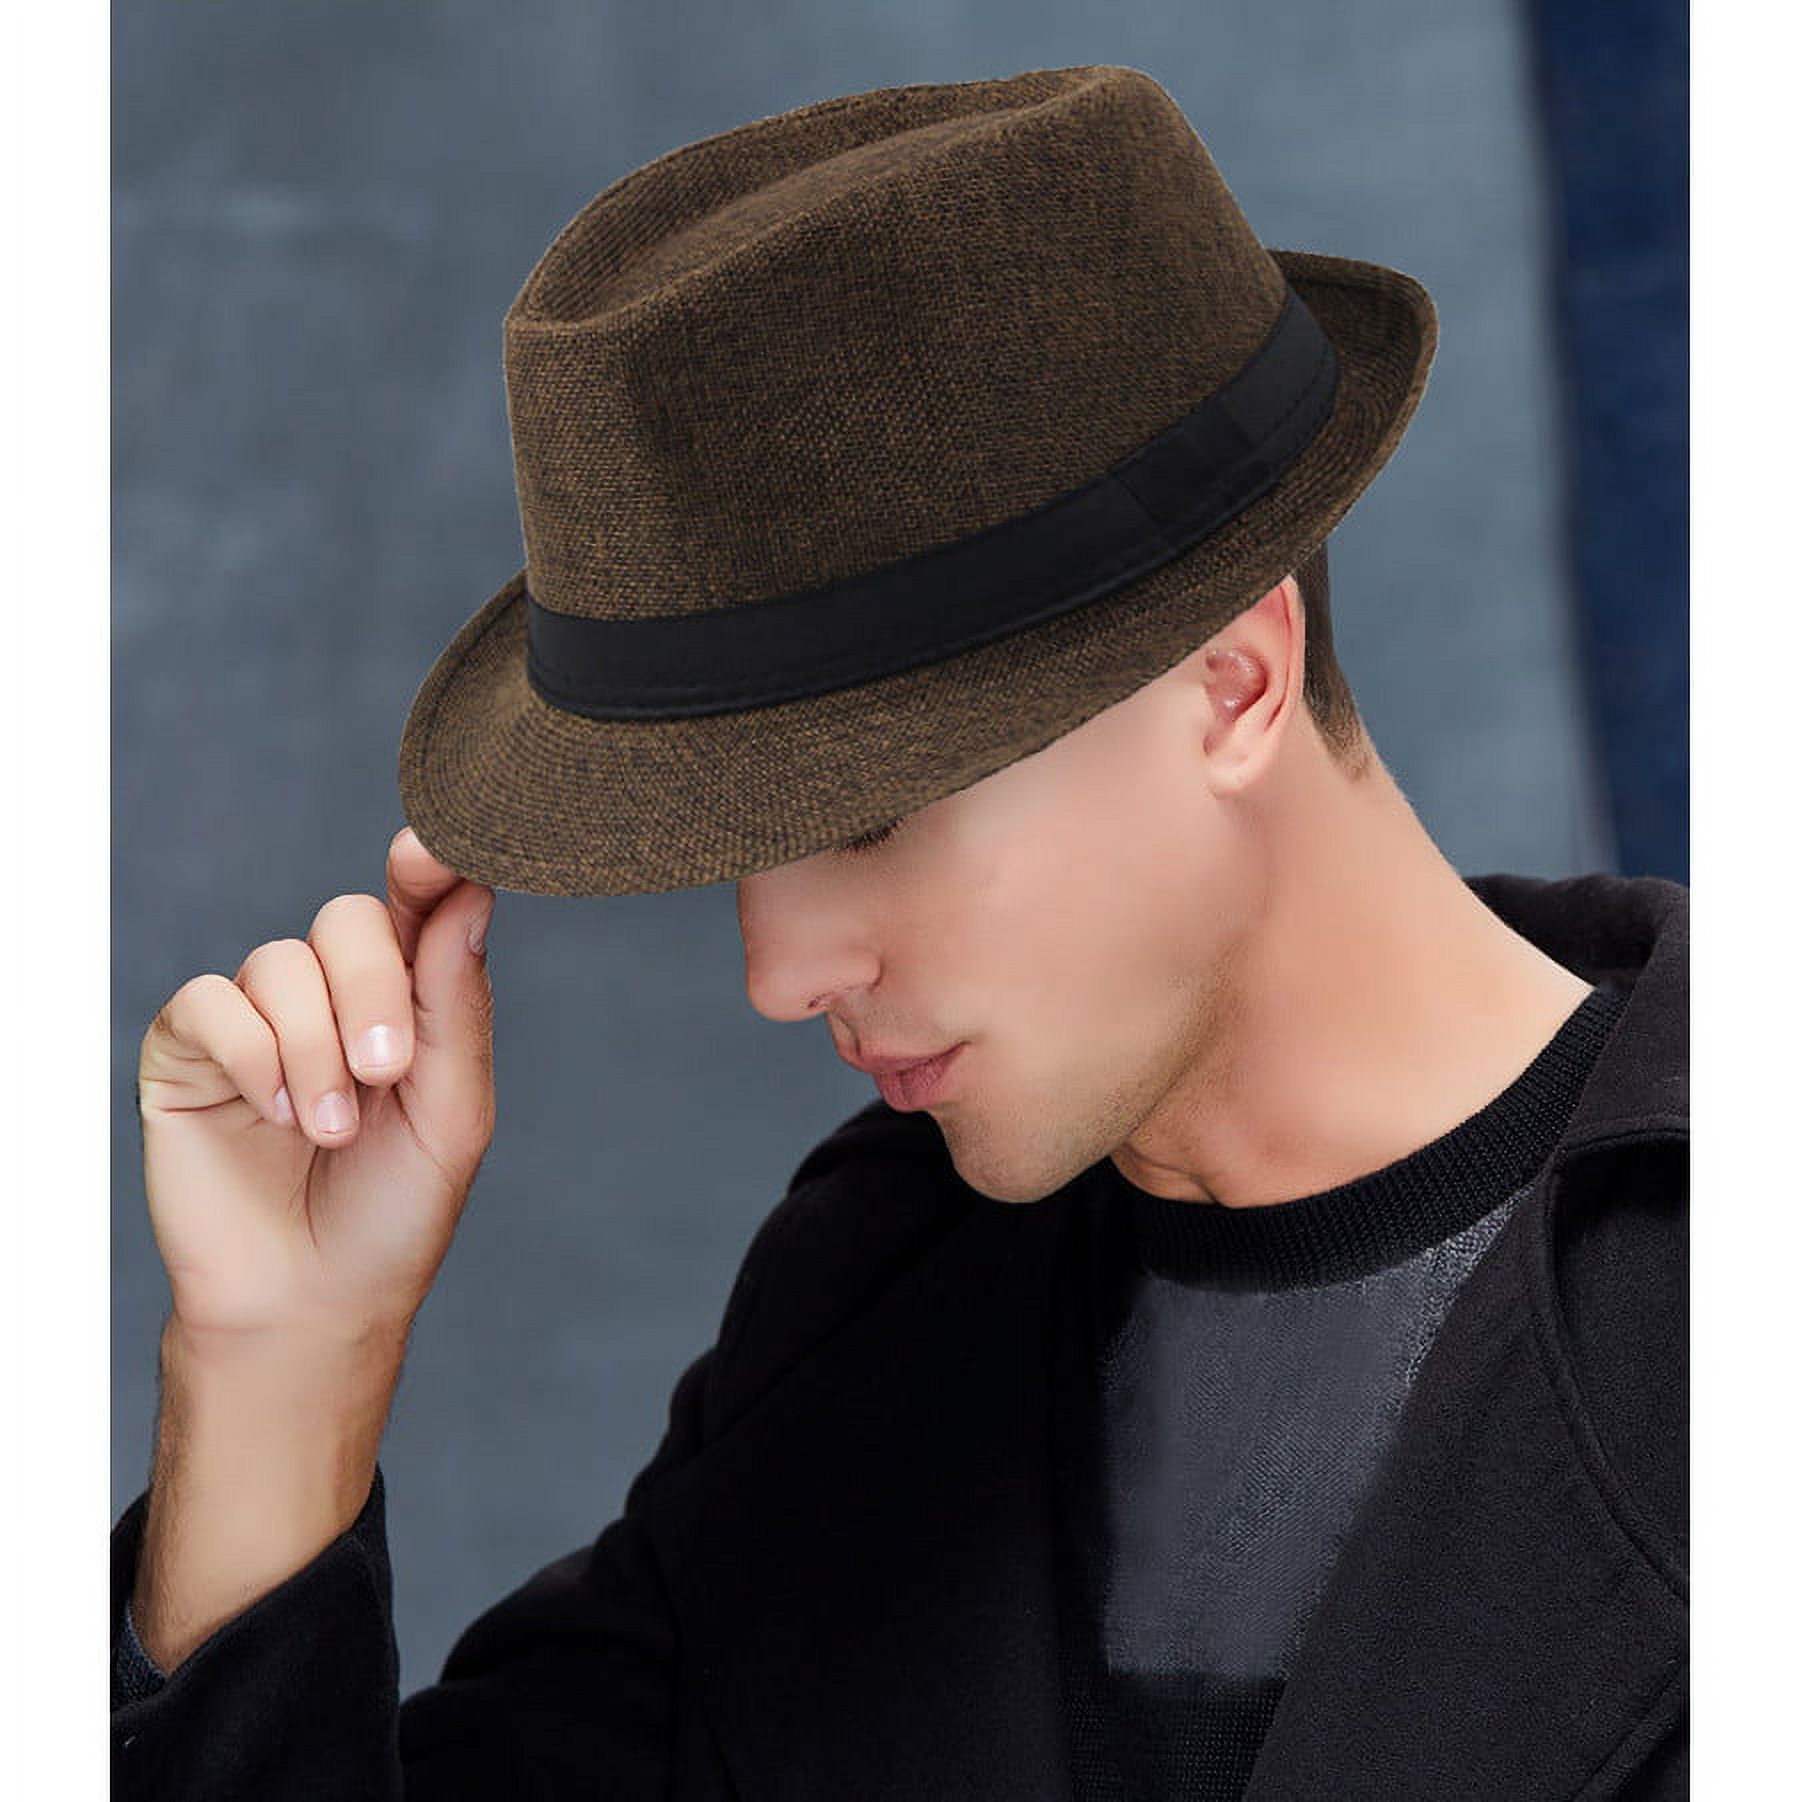 Hats for Men Jazz Hat Men's Breathable Linen Top Hat Outdoor Sun Hat Curl Straw Hat Hats for Women - image 1 of 5